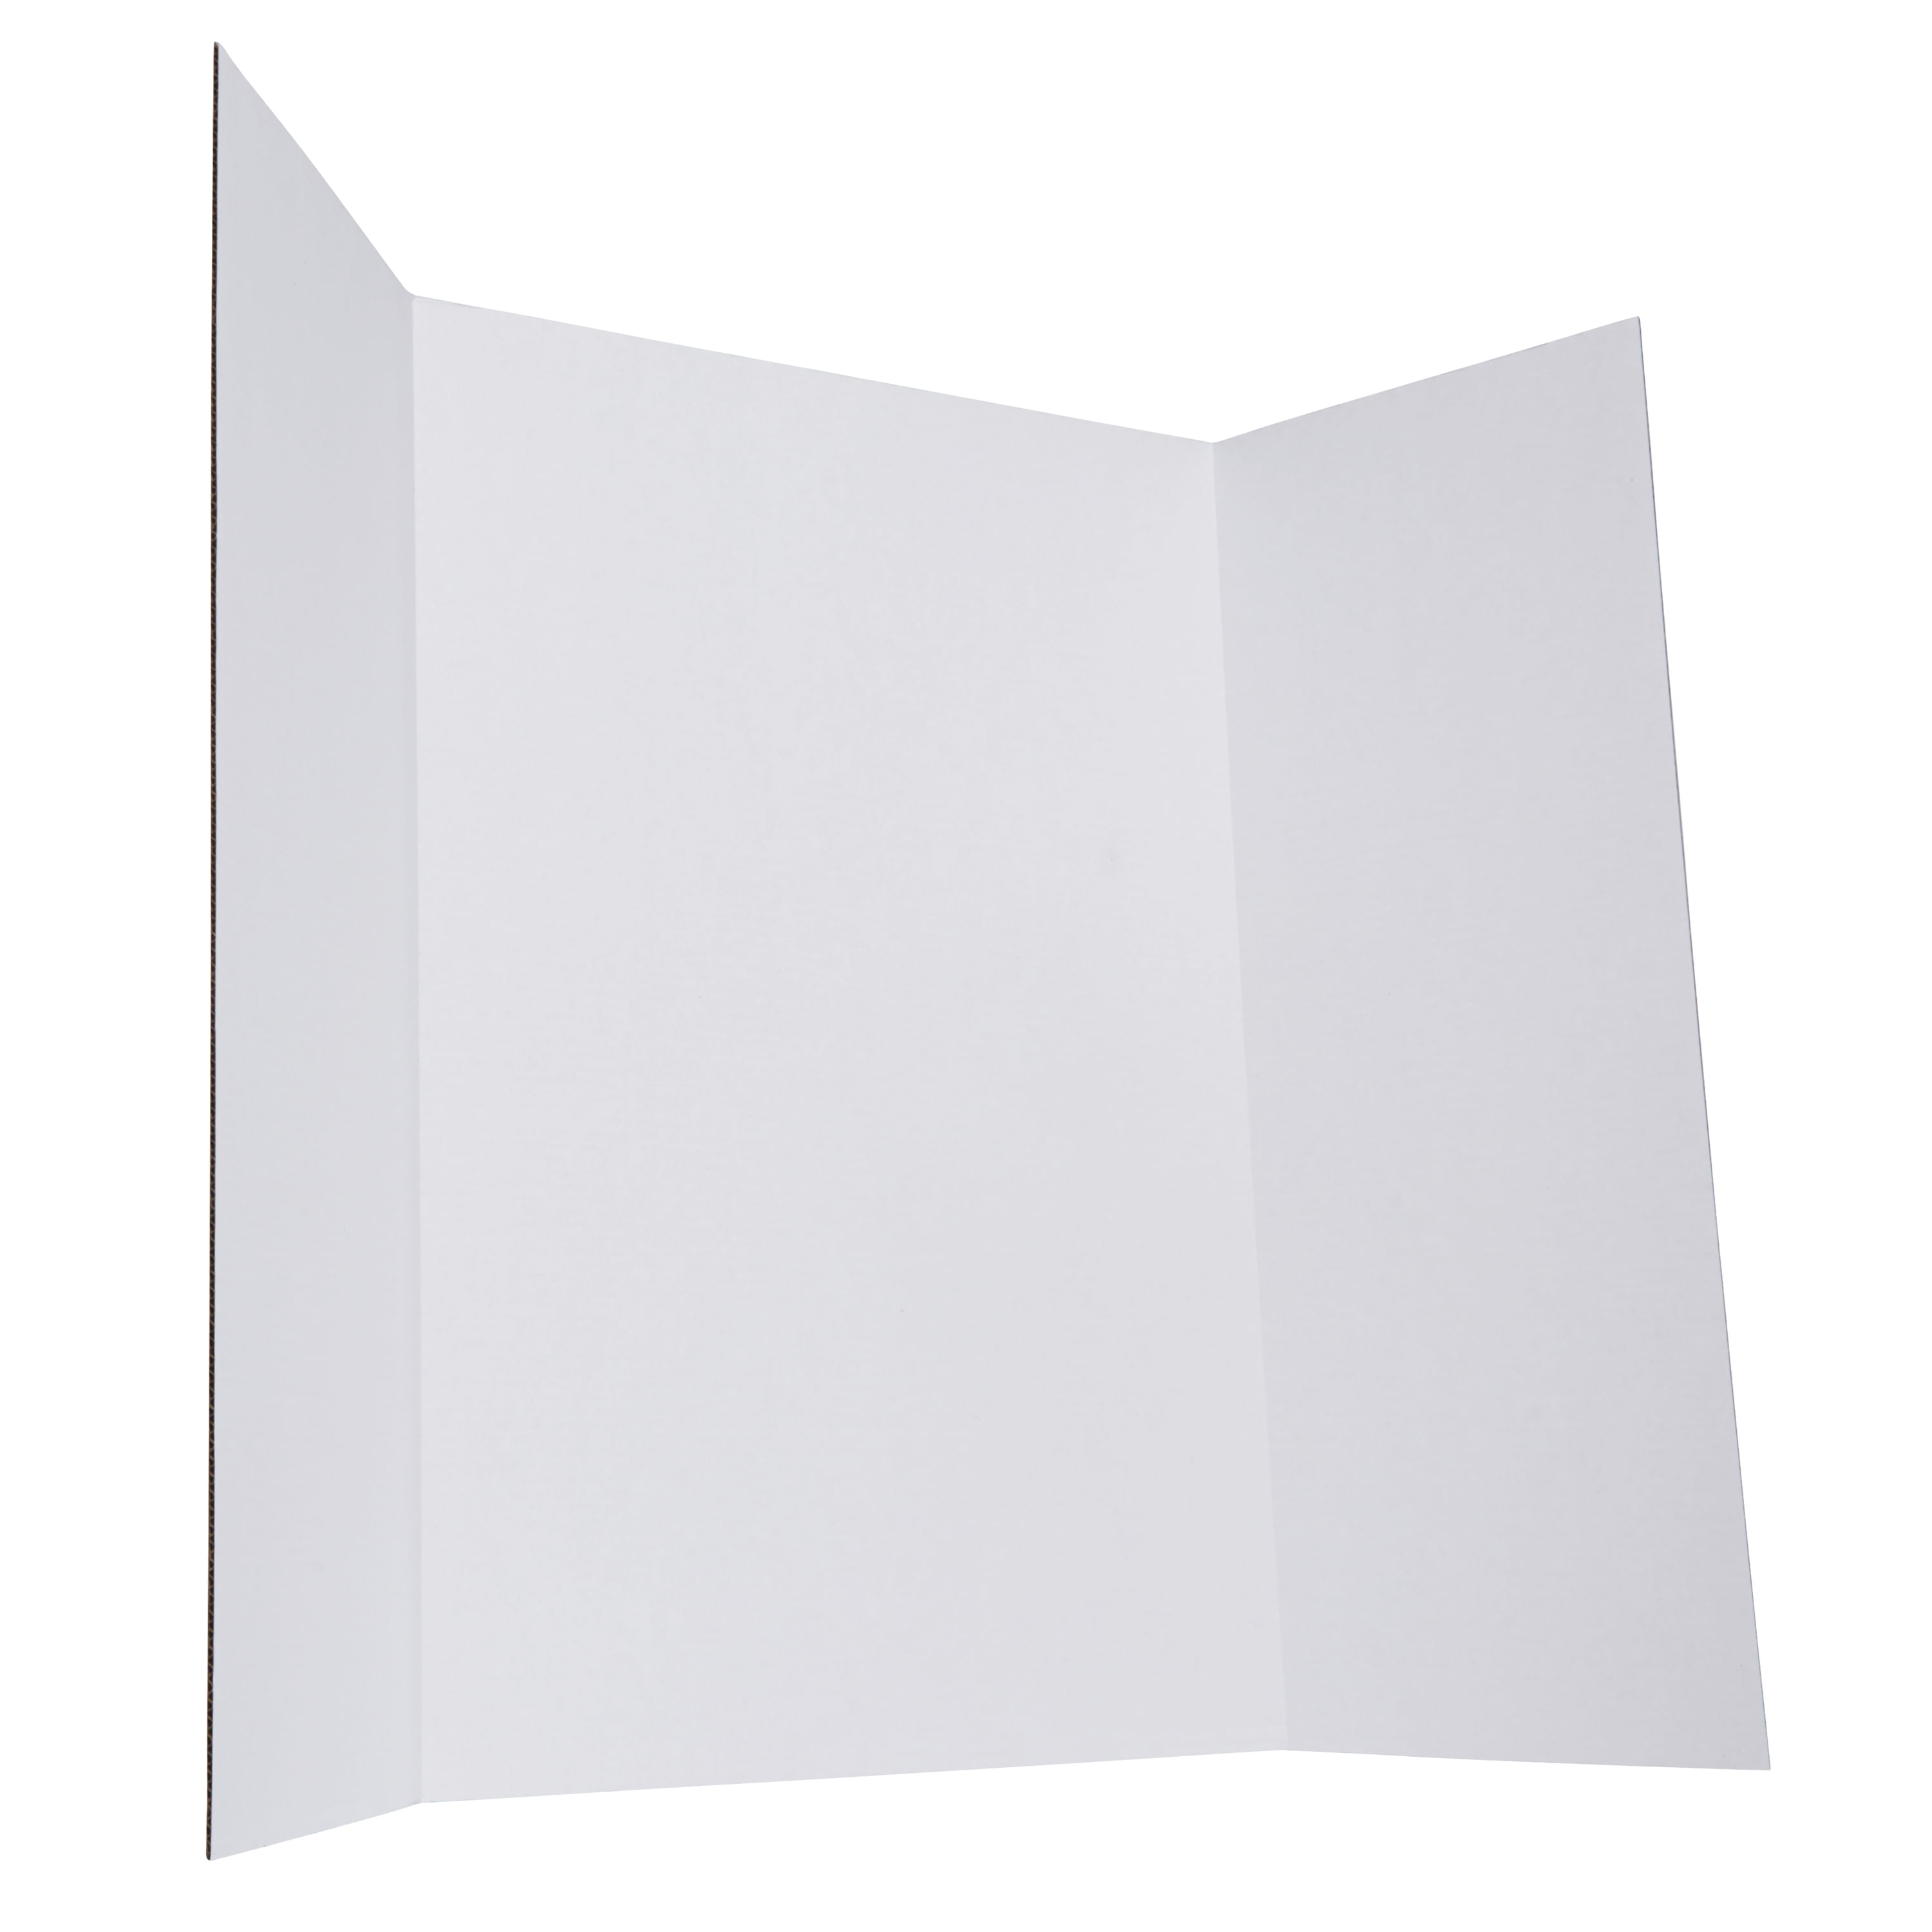 Elmer's 28 x 20 Foam Presentation Board - White